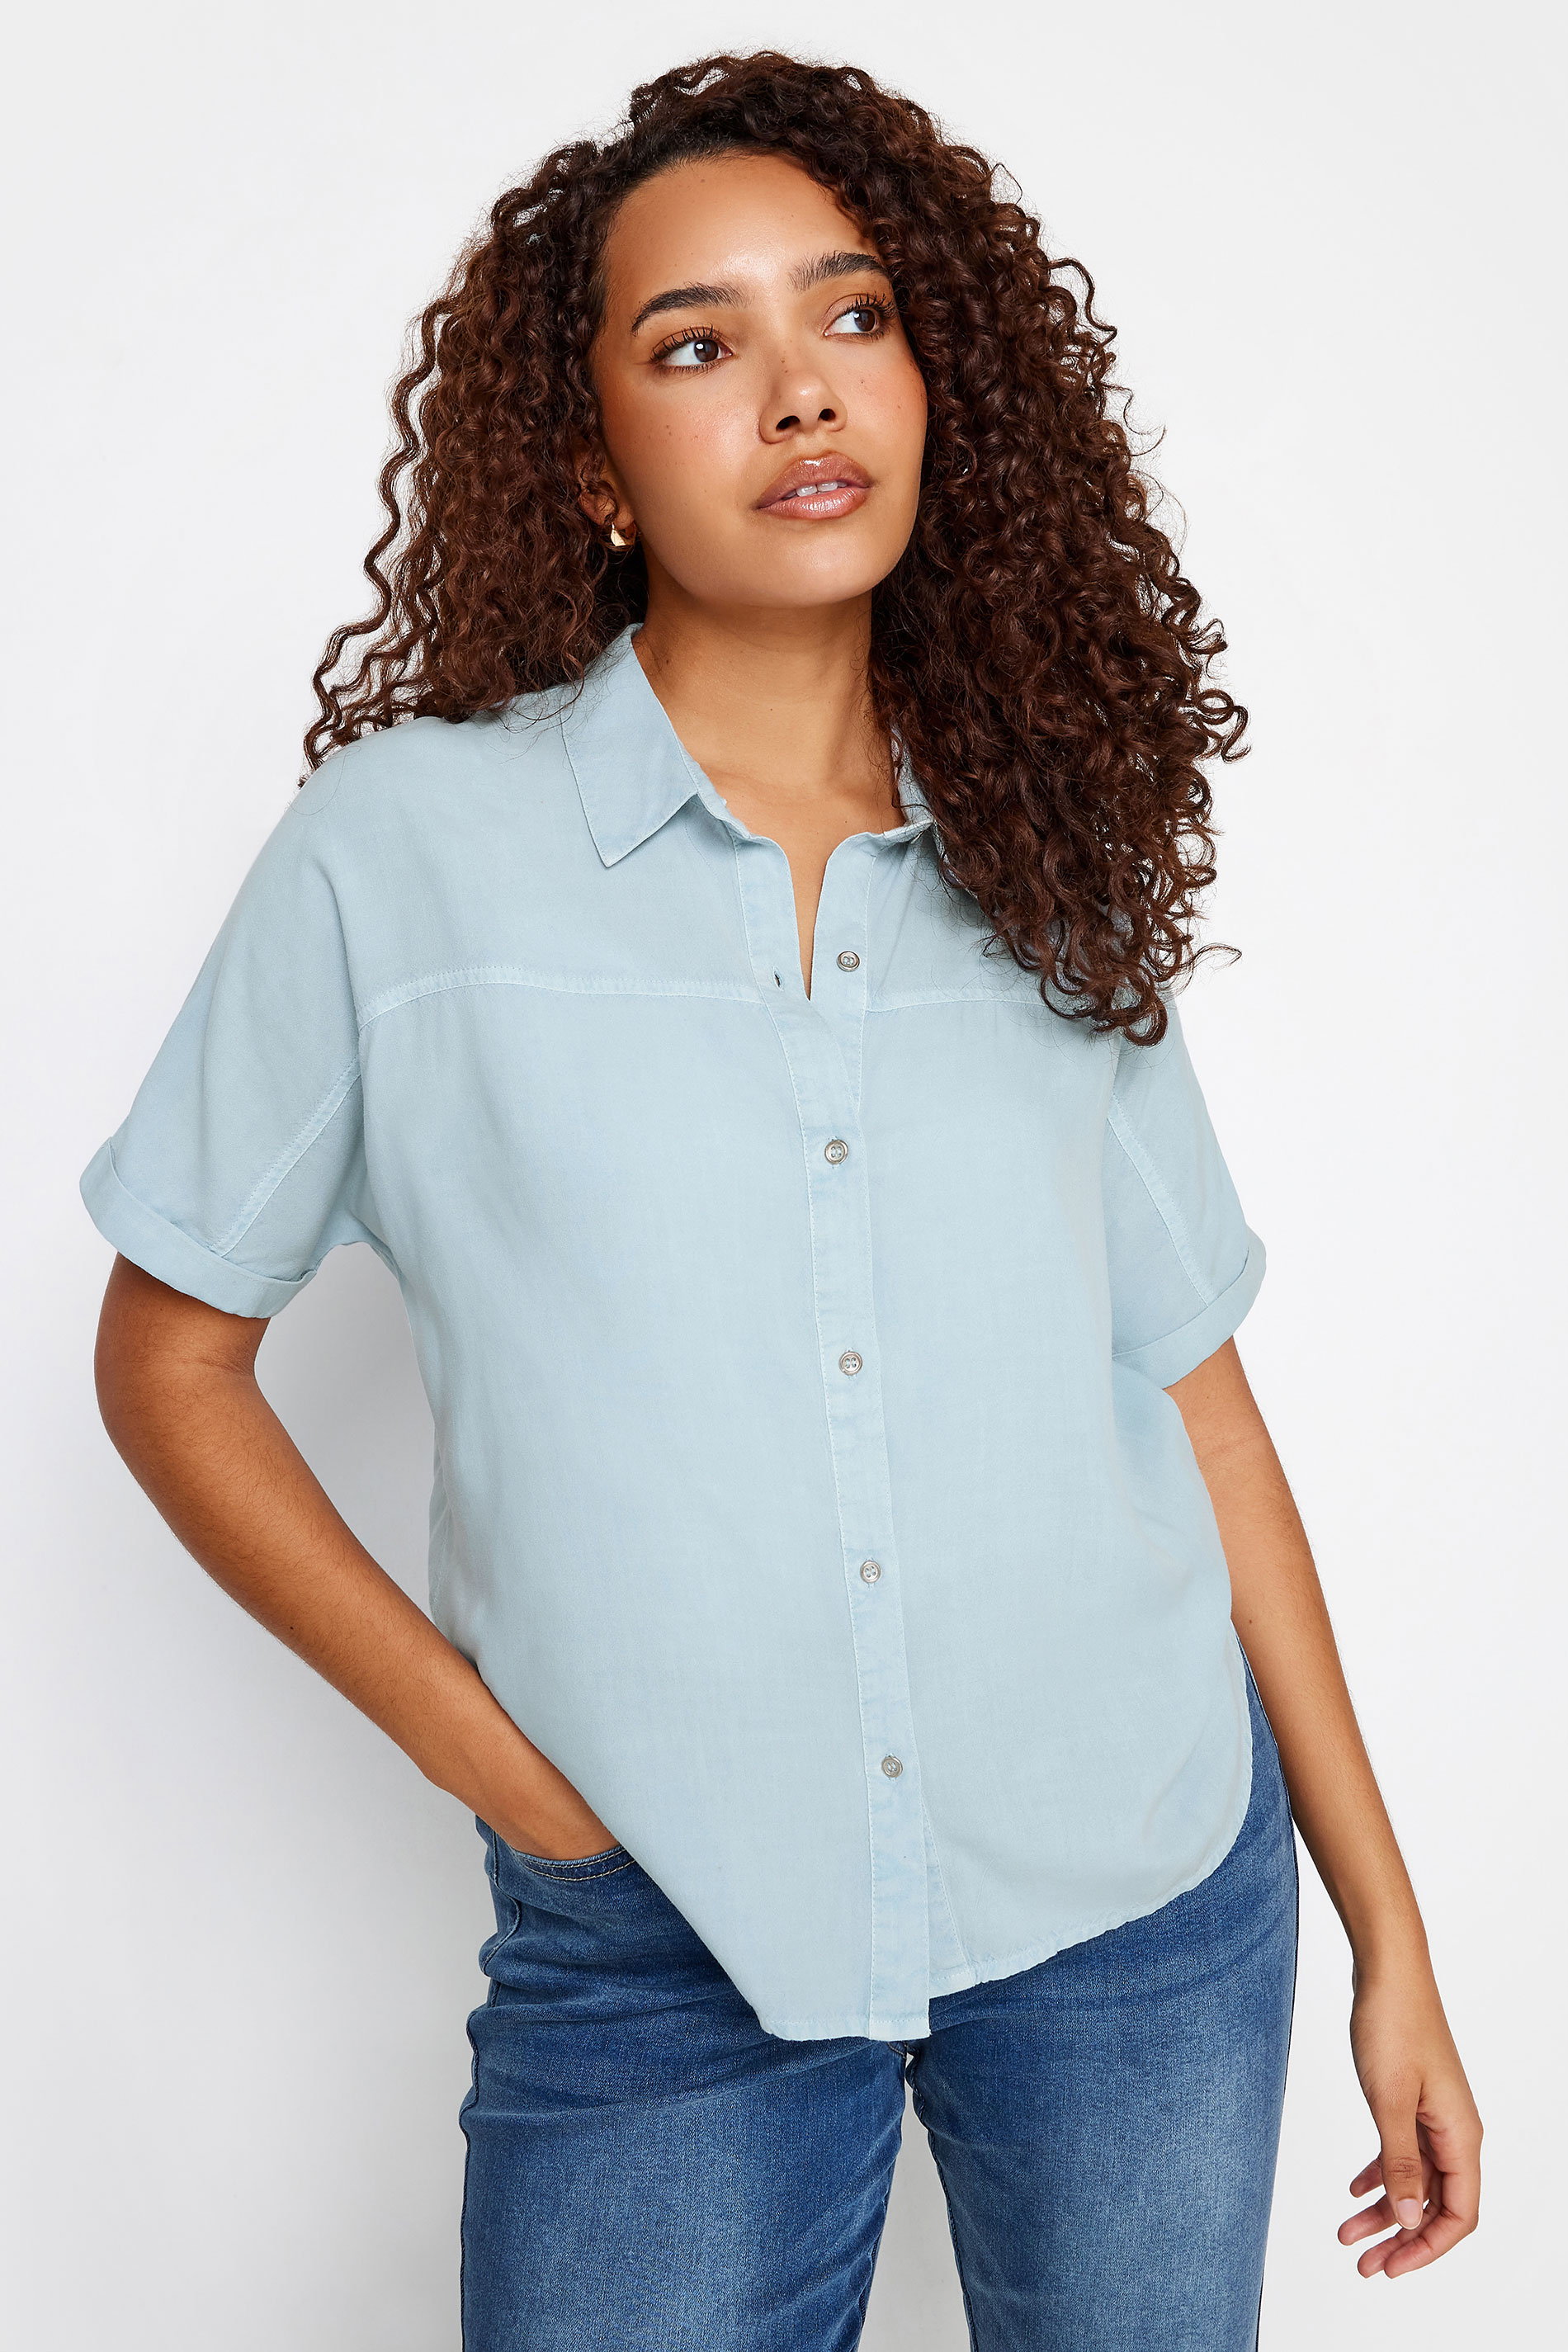 M&Co Blue Chambray Short Sleeve Shirt | M&Co 1